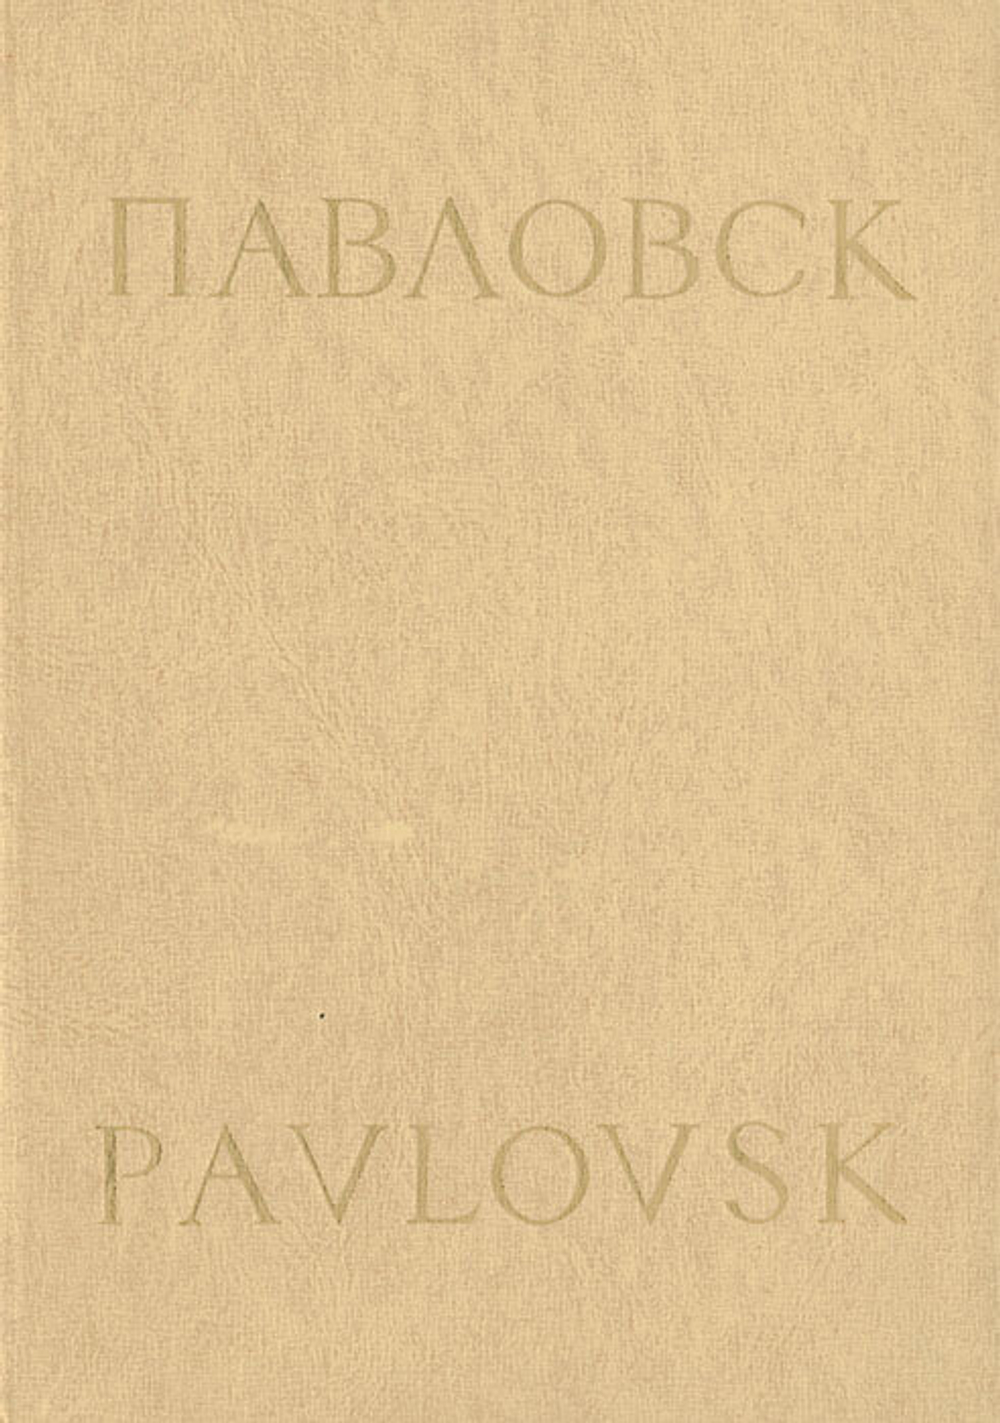 Pavlovsk / Павловск. Альбом